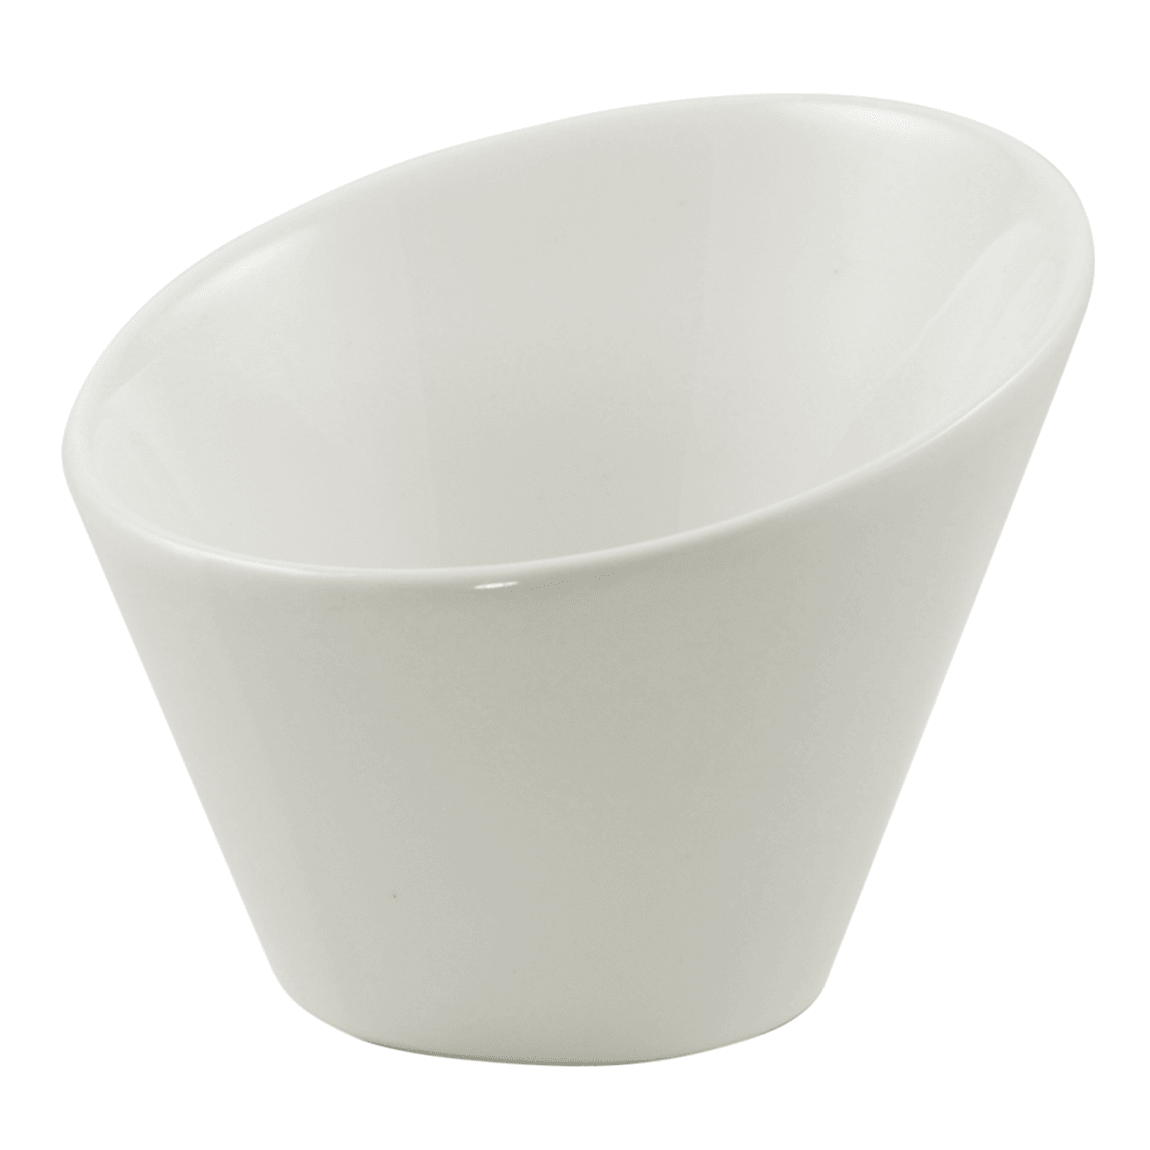 10 Strawberry Street WTR-3SLNTBWL 2 oz Slanted Bowl - Porcelain, White